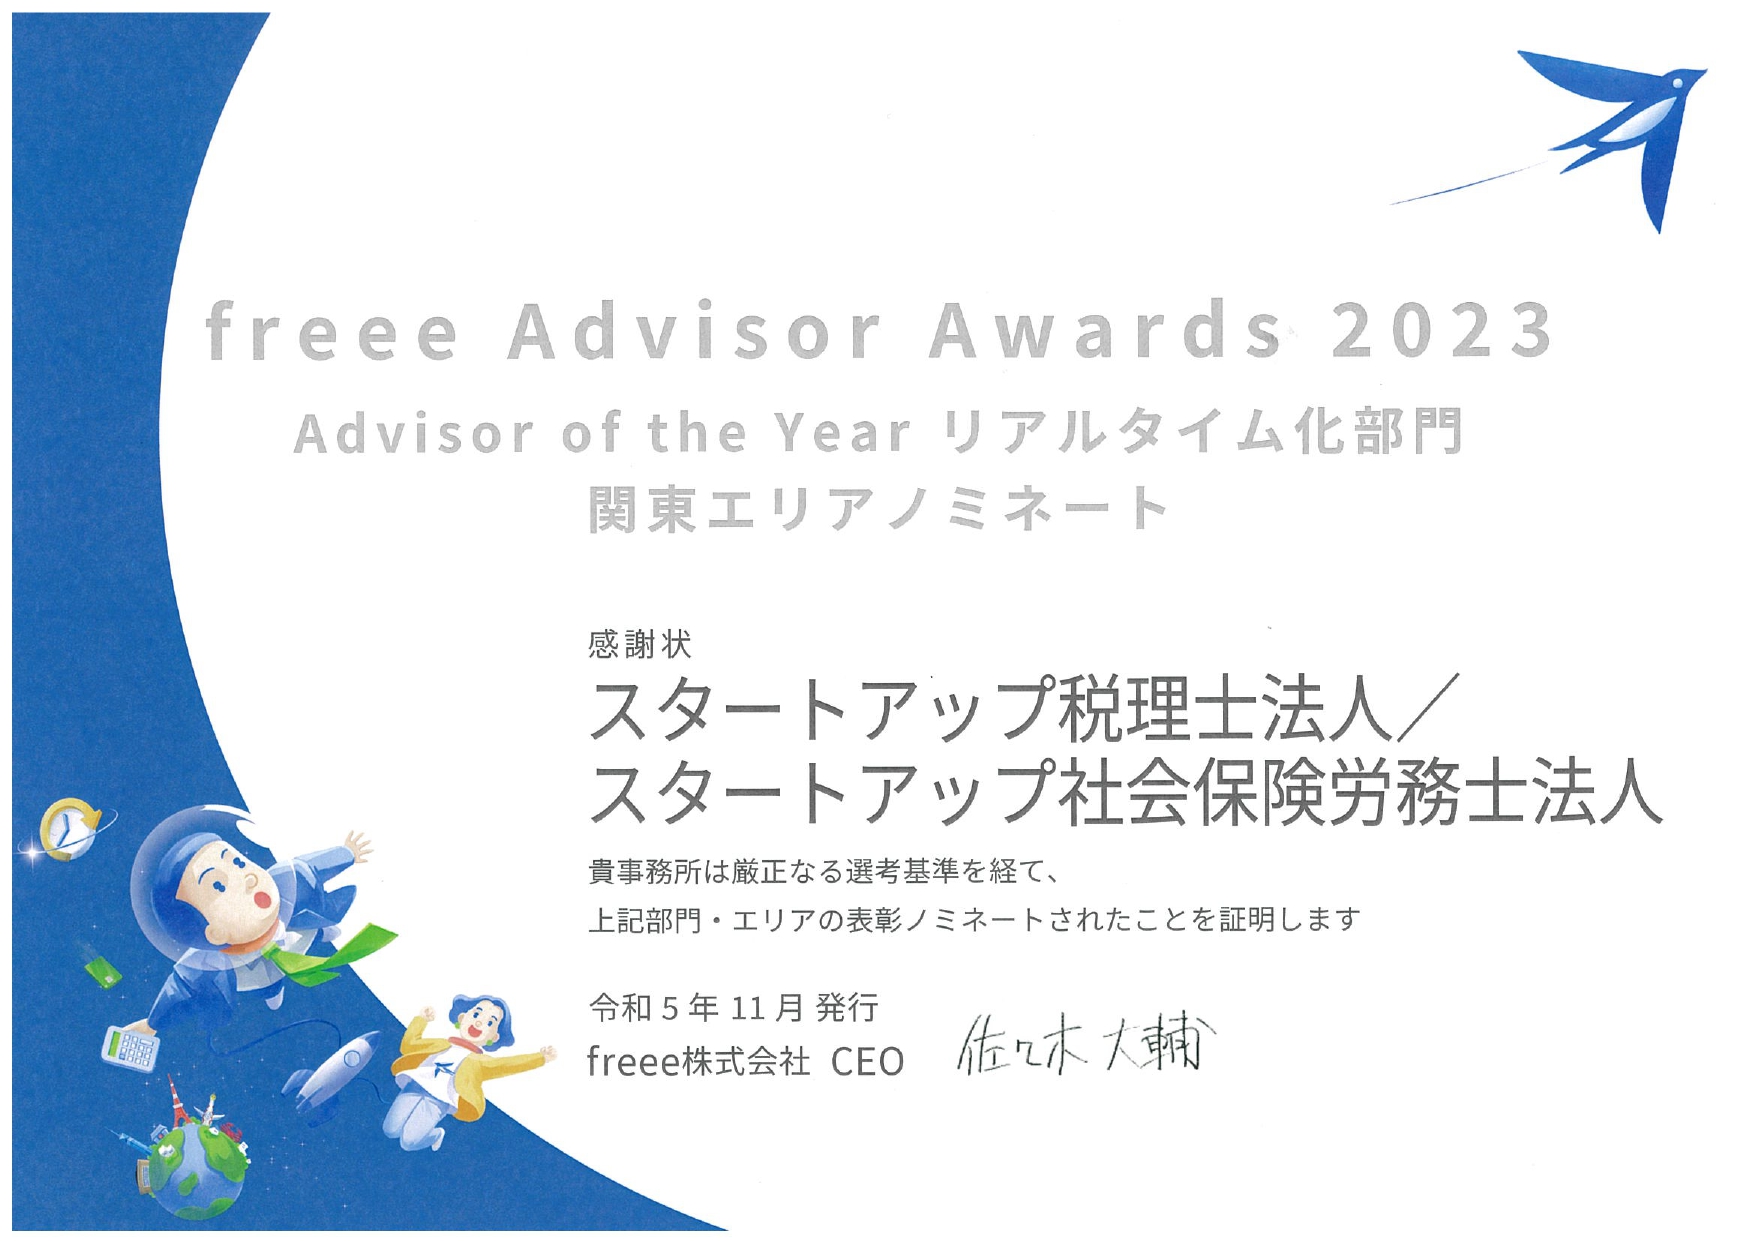 『freee Adviser Awards 2023』エリアノミネート感謝状